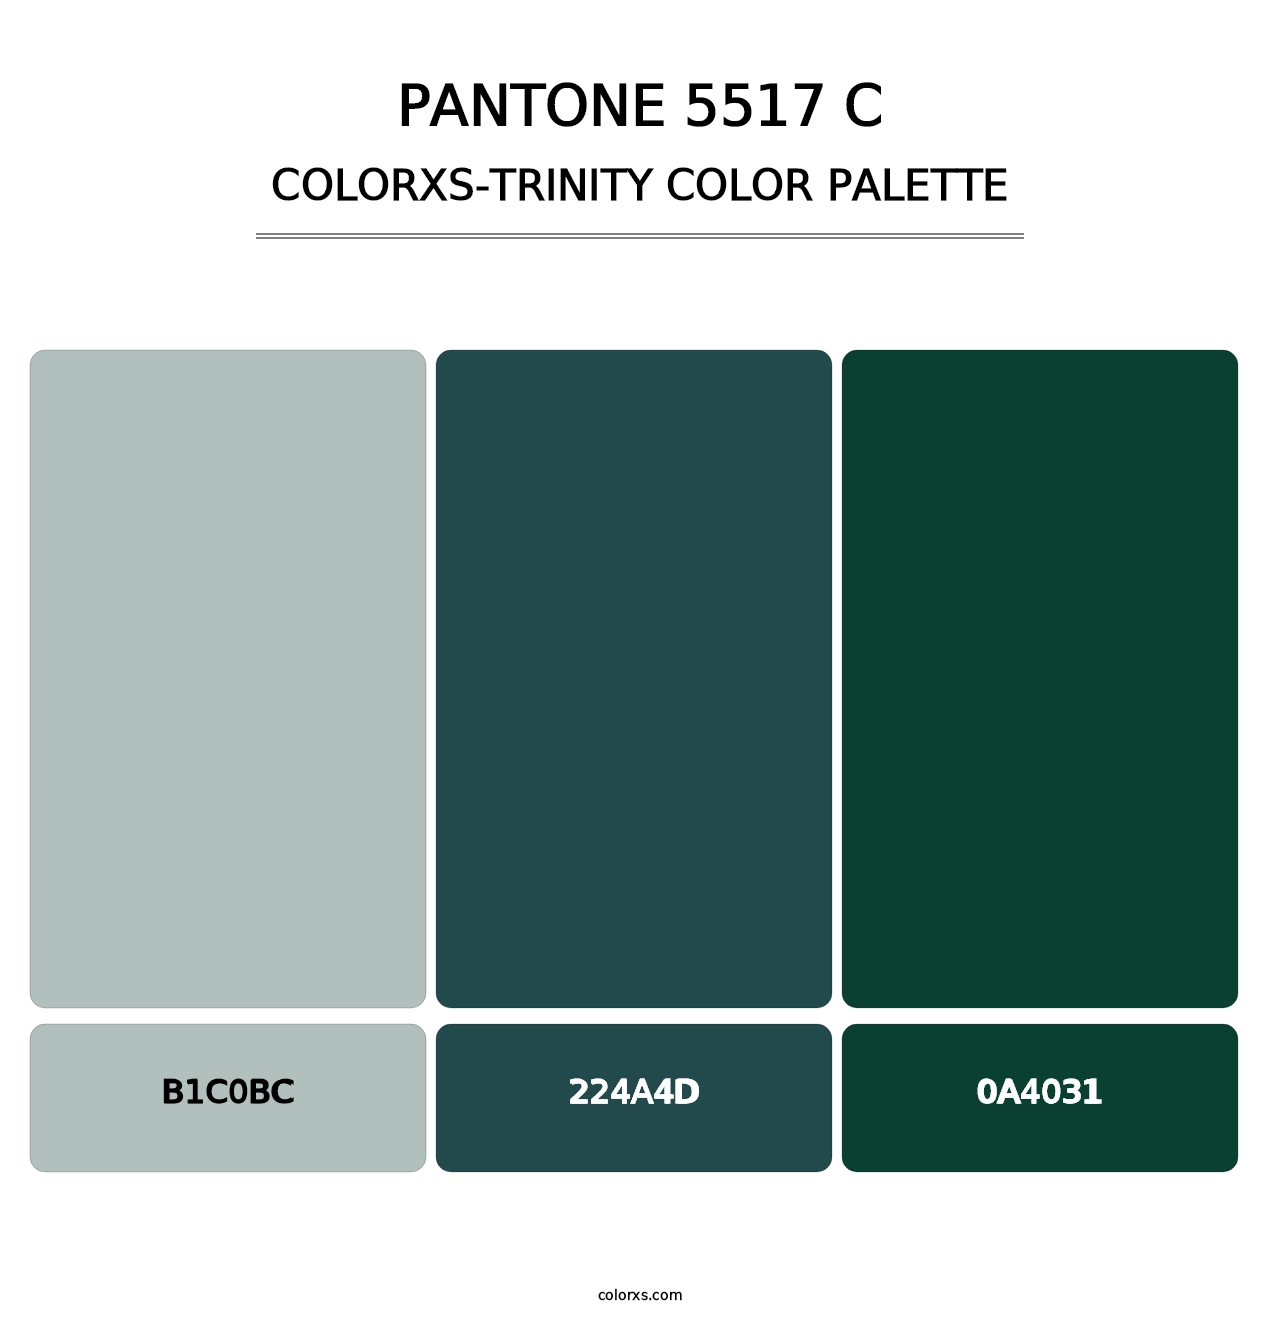 PANTONE 5517 C - Colorxs Trinity Palette